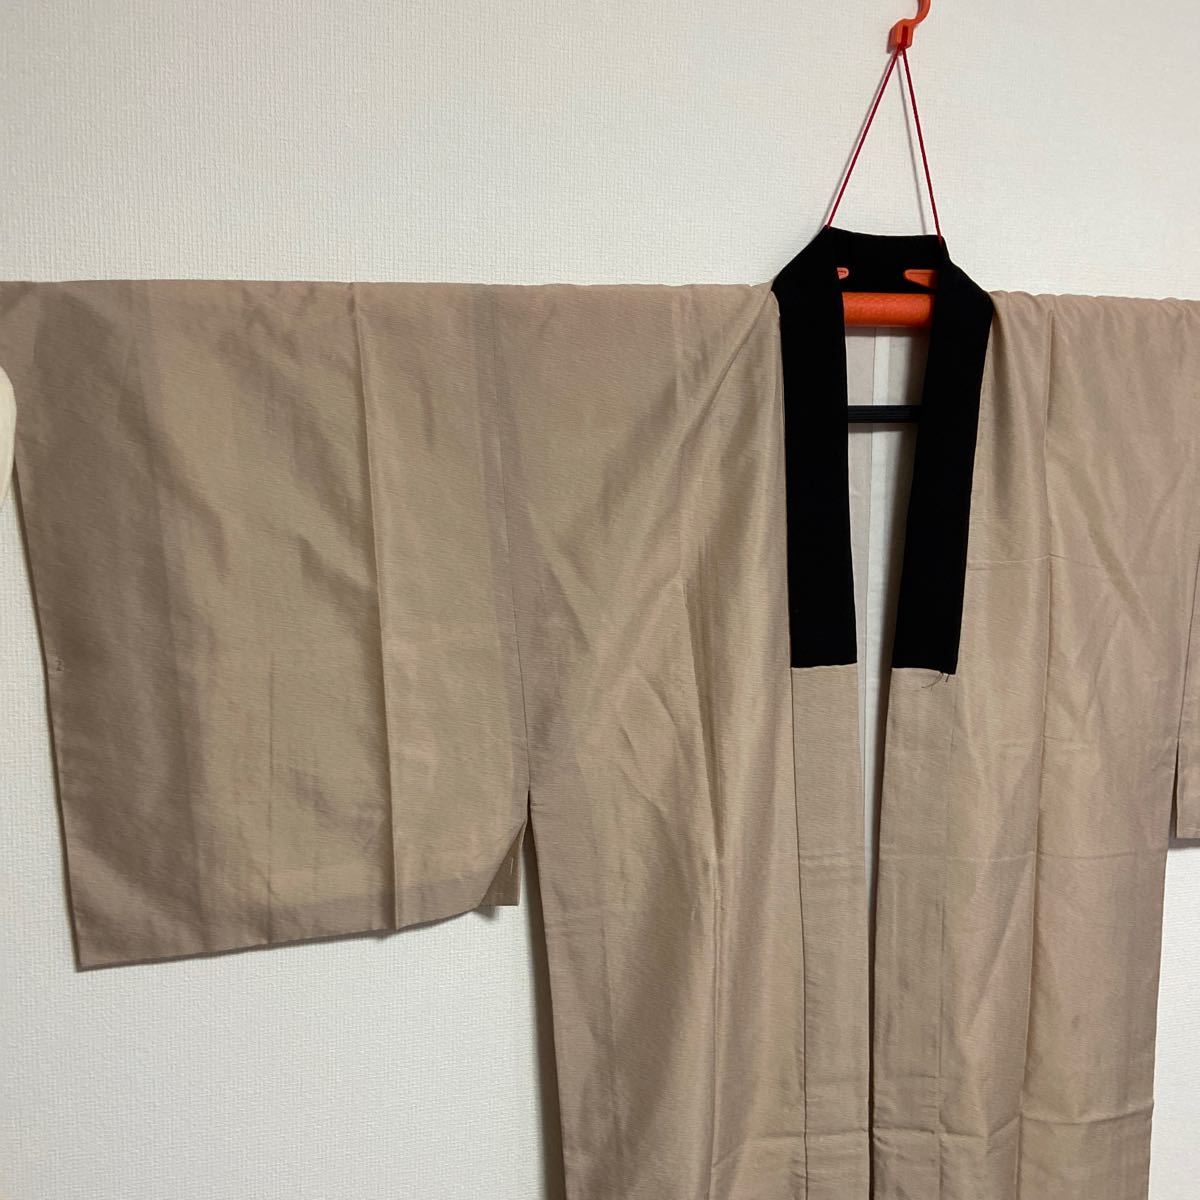  Japanese clothes * men's long kimono-like garment simple stylish * present-day kimono kimono for inner rare dress length 147.